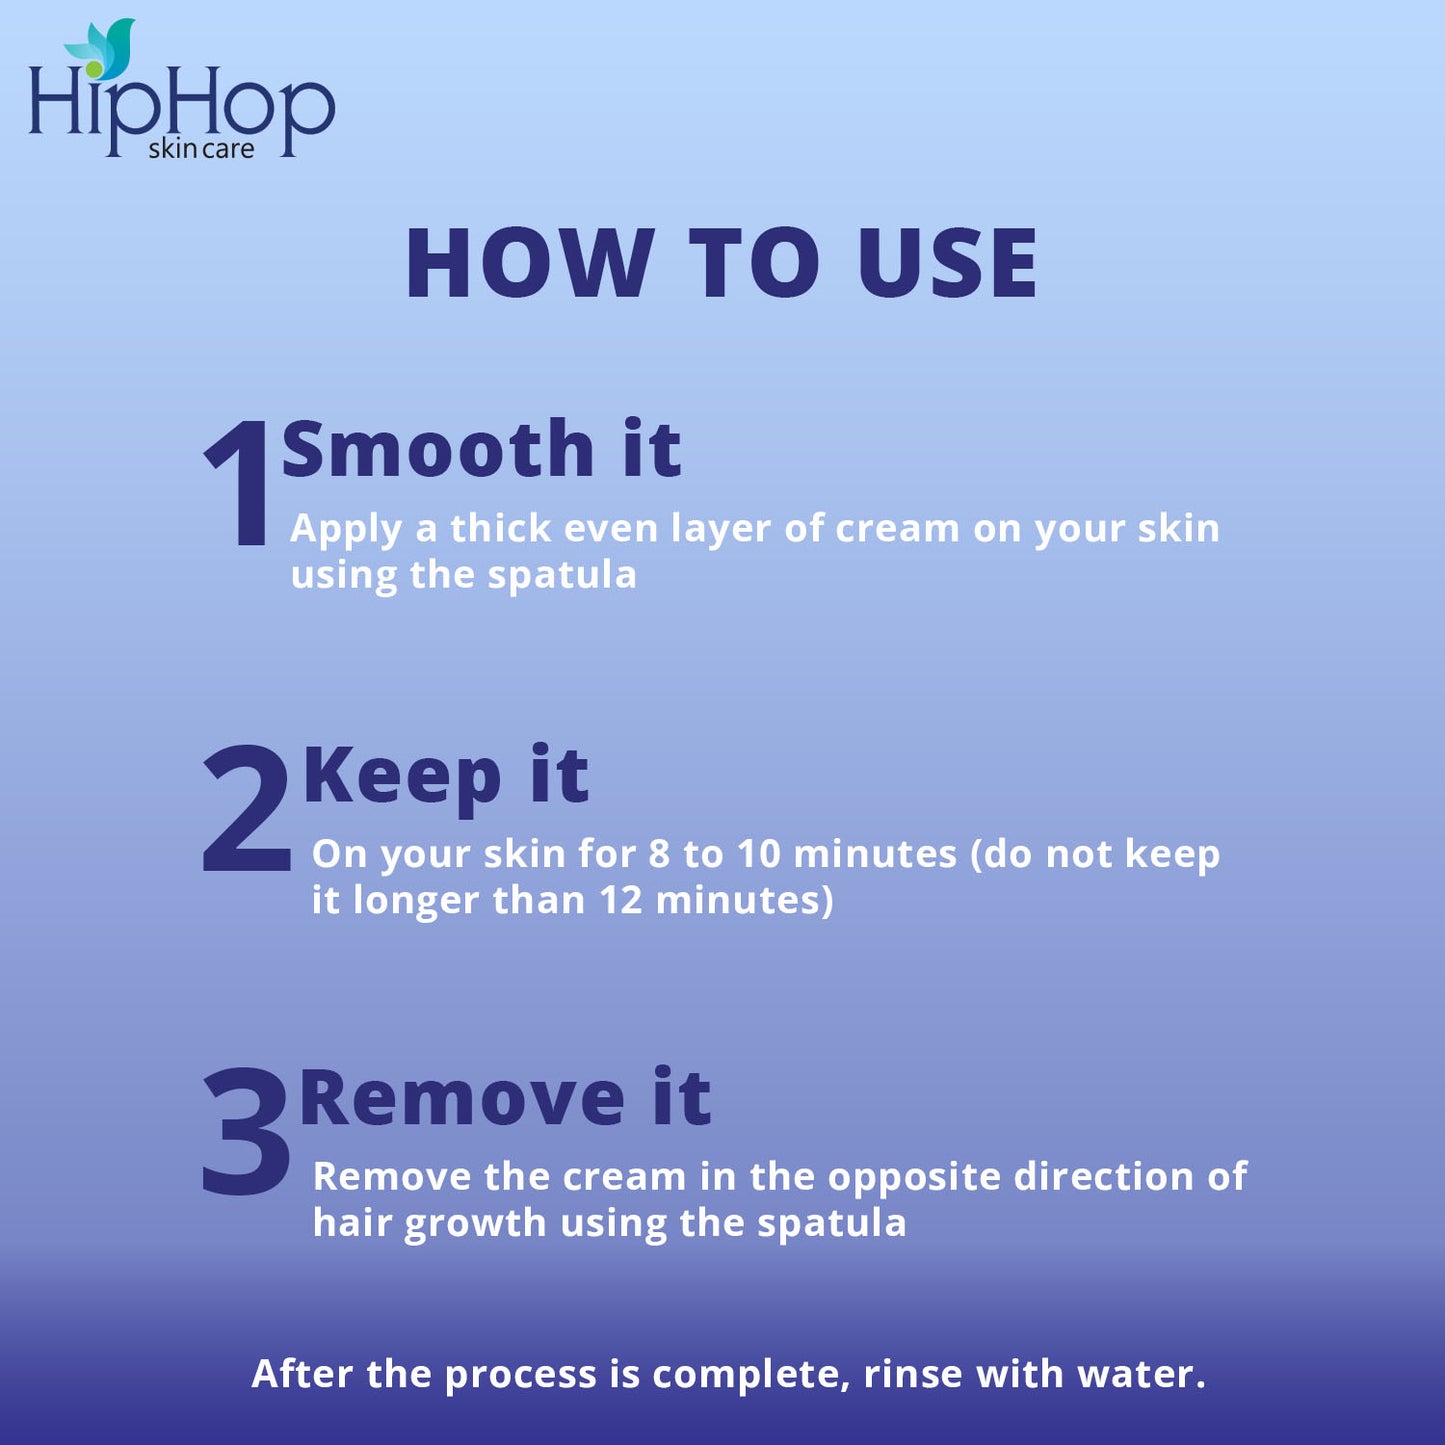 HipHop Body Wax Strips (Aloe Vera, 8 Strips) + Hair Removal Cream for Men (Aleo Vera, 100gm)